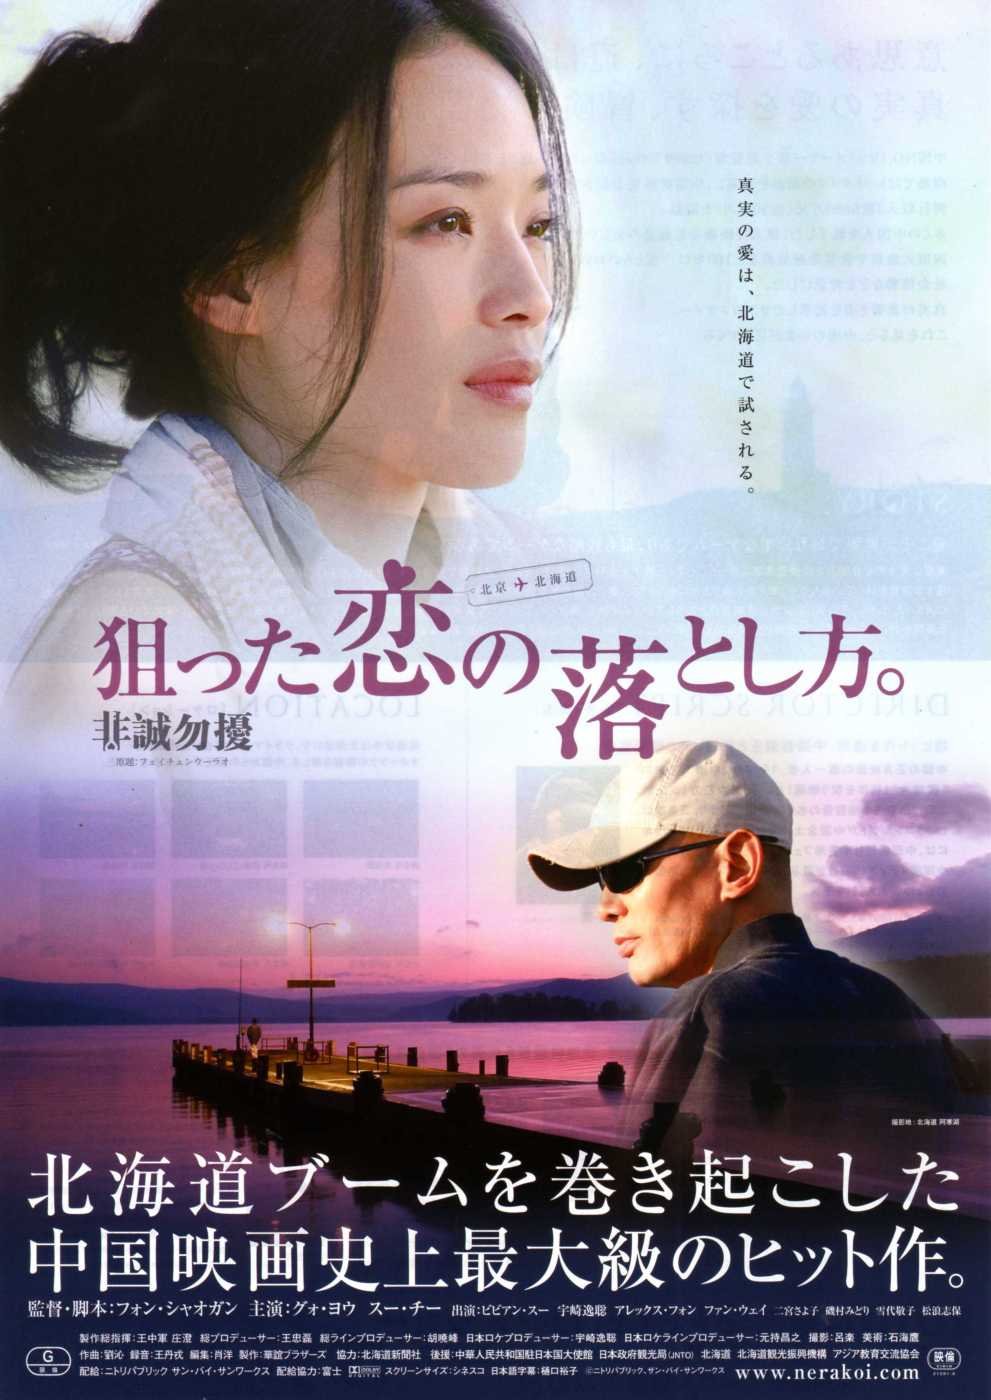 Mandarin poster of the movie Fei Cheng Wu Rao